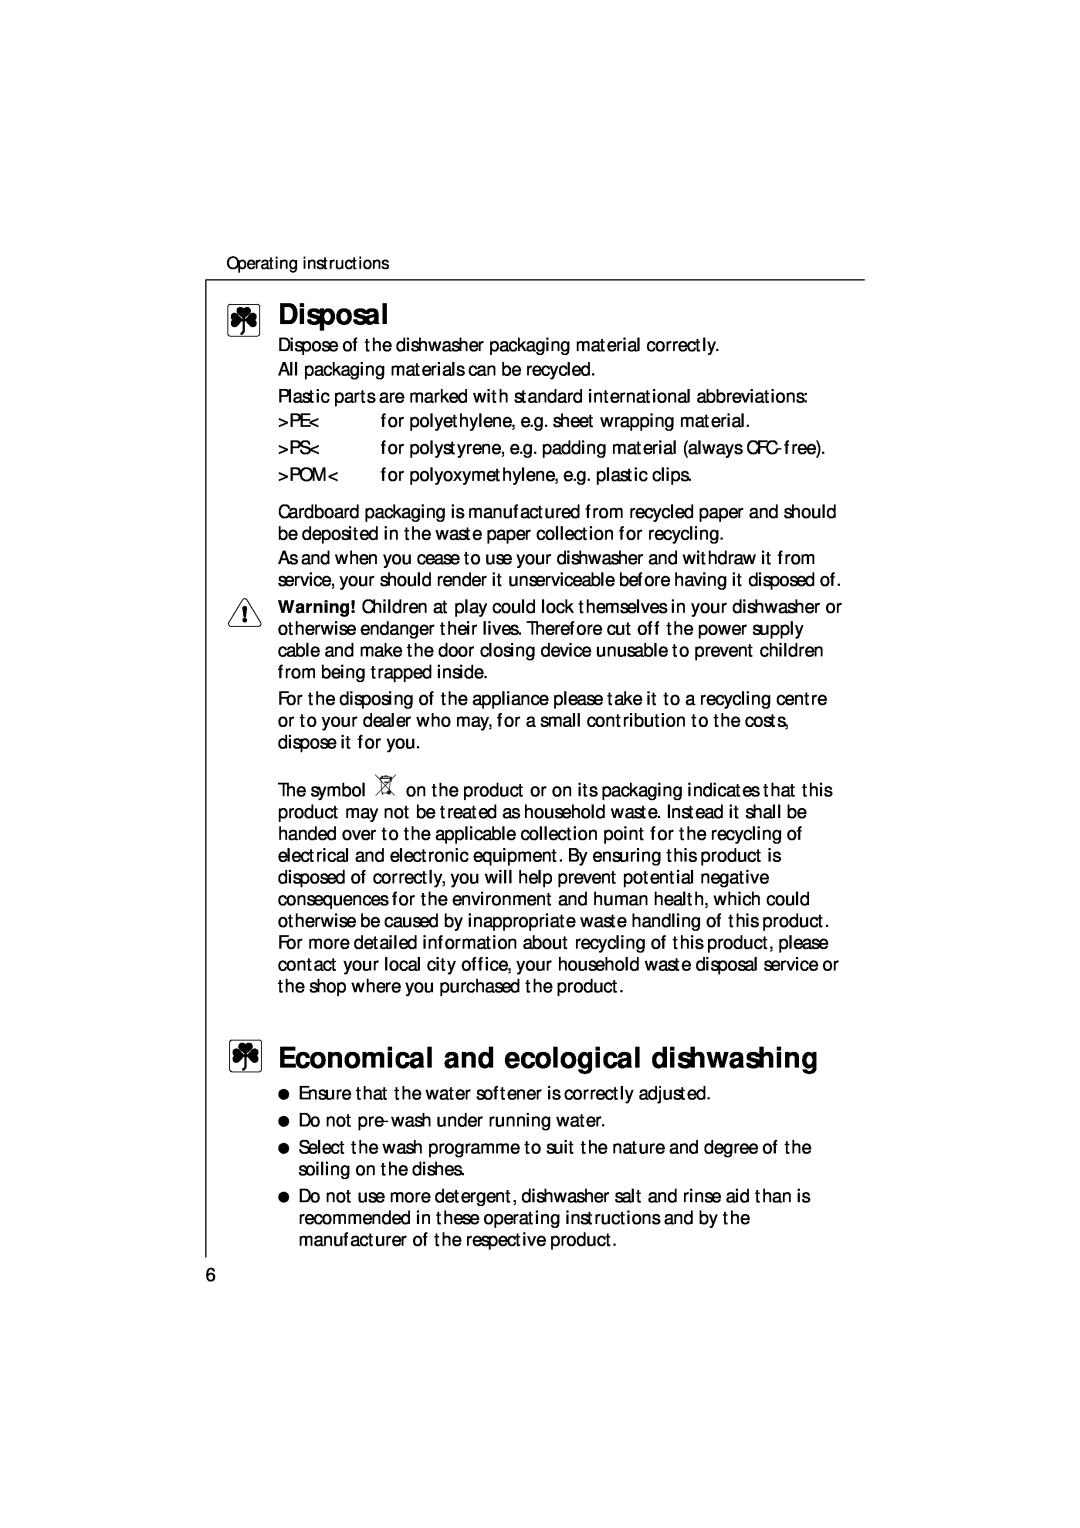 Electrolux 85480 VI manual Disposal, Economical and ecological dishwashing 